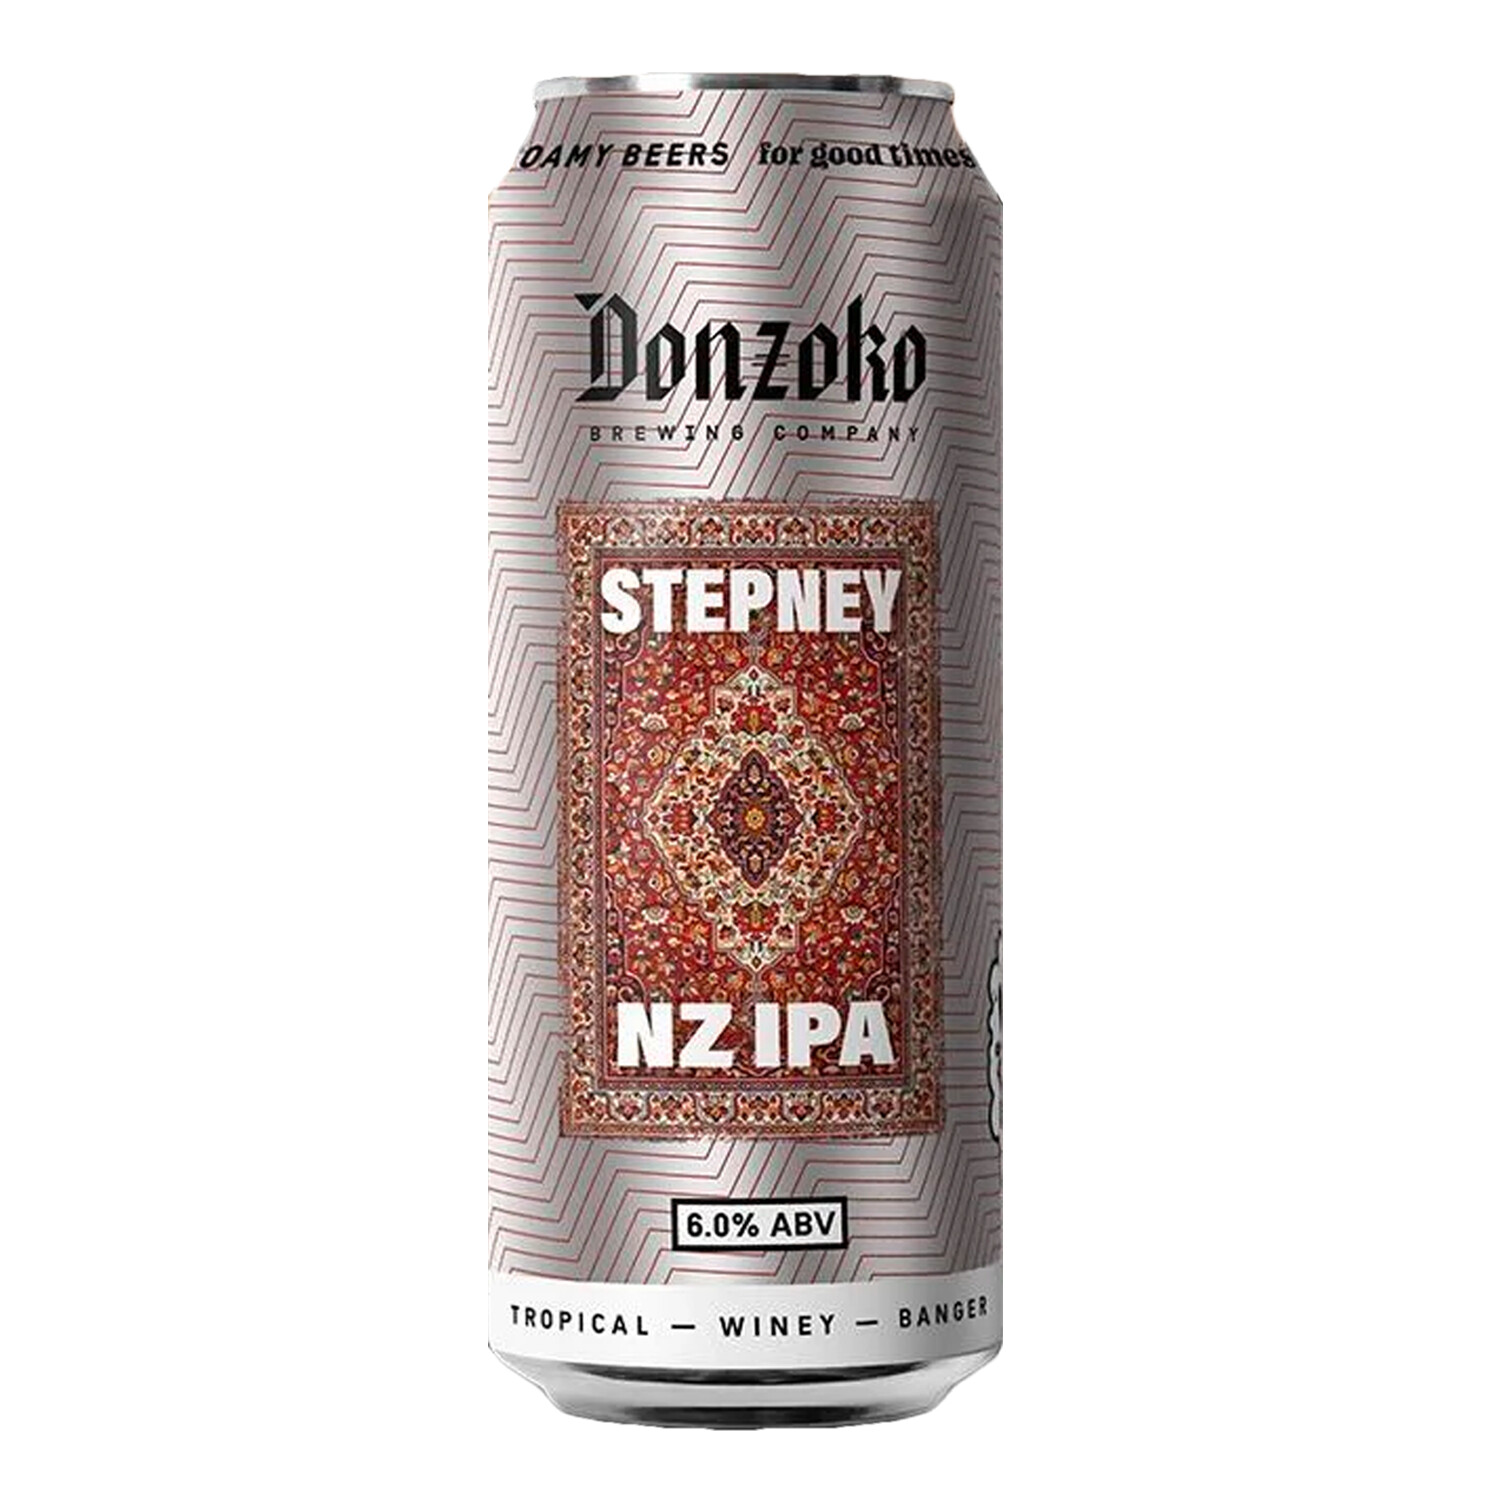 Donzoko Stepney NZ IPA